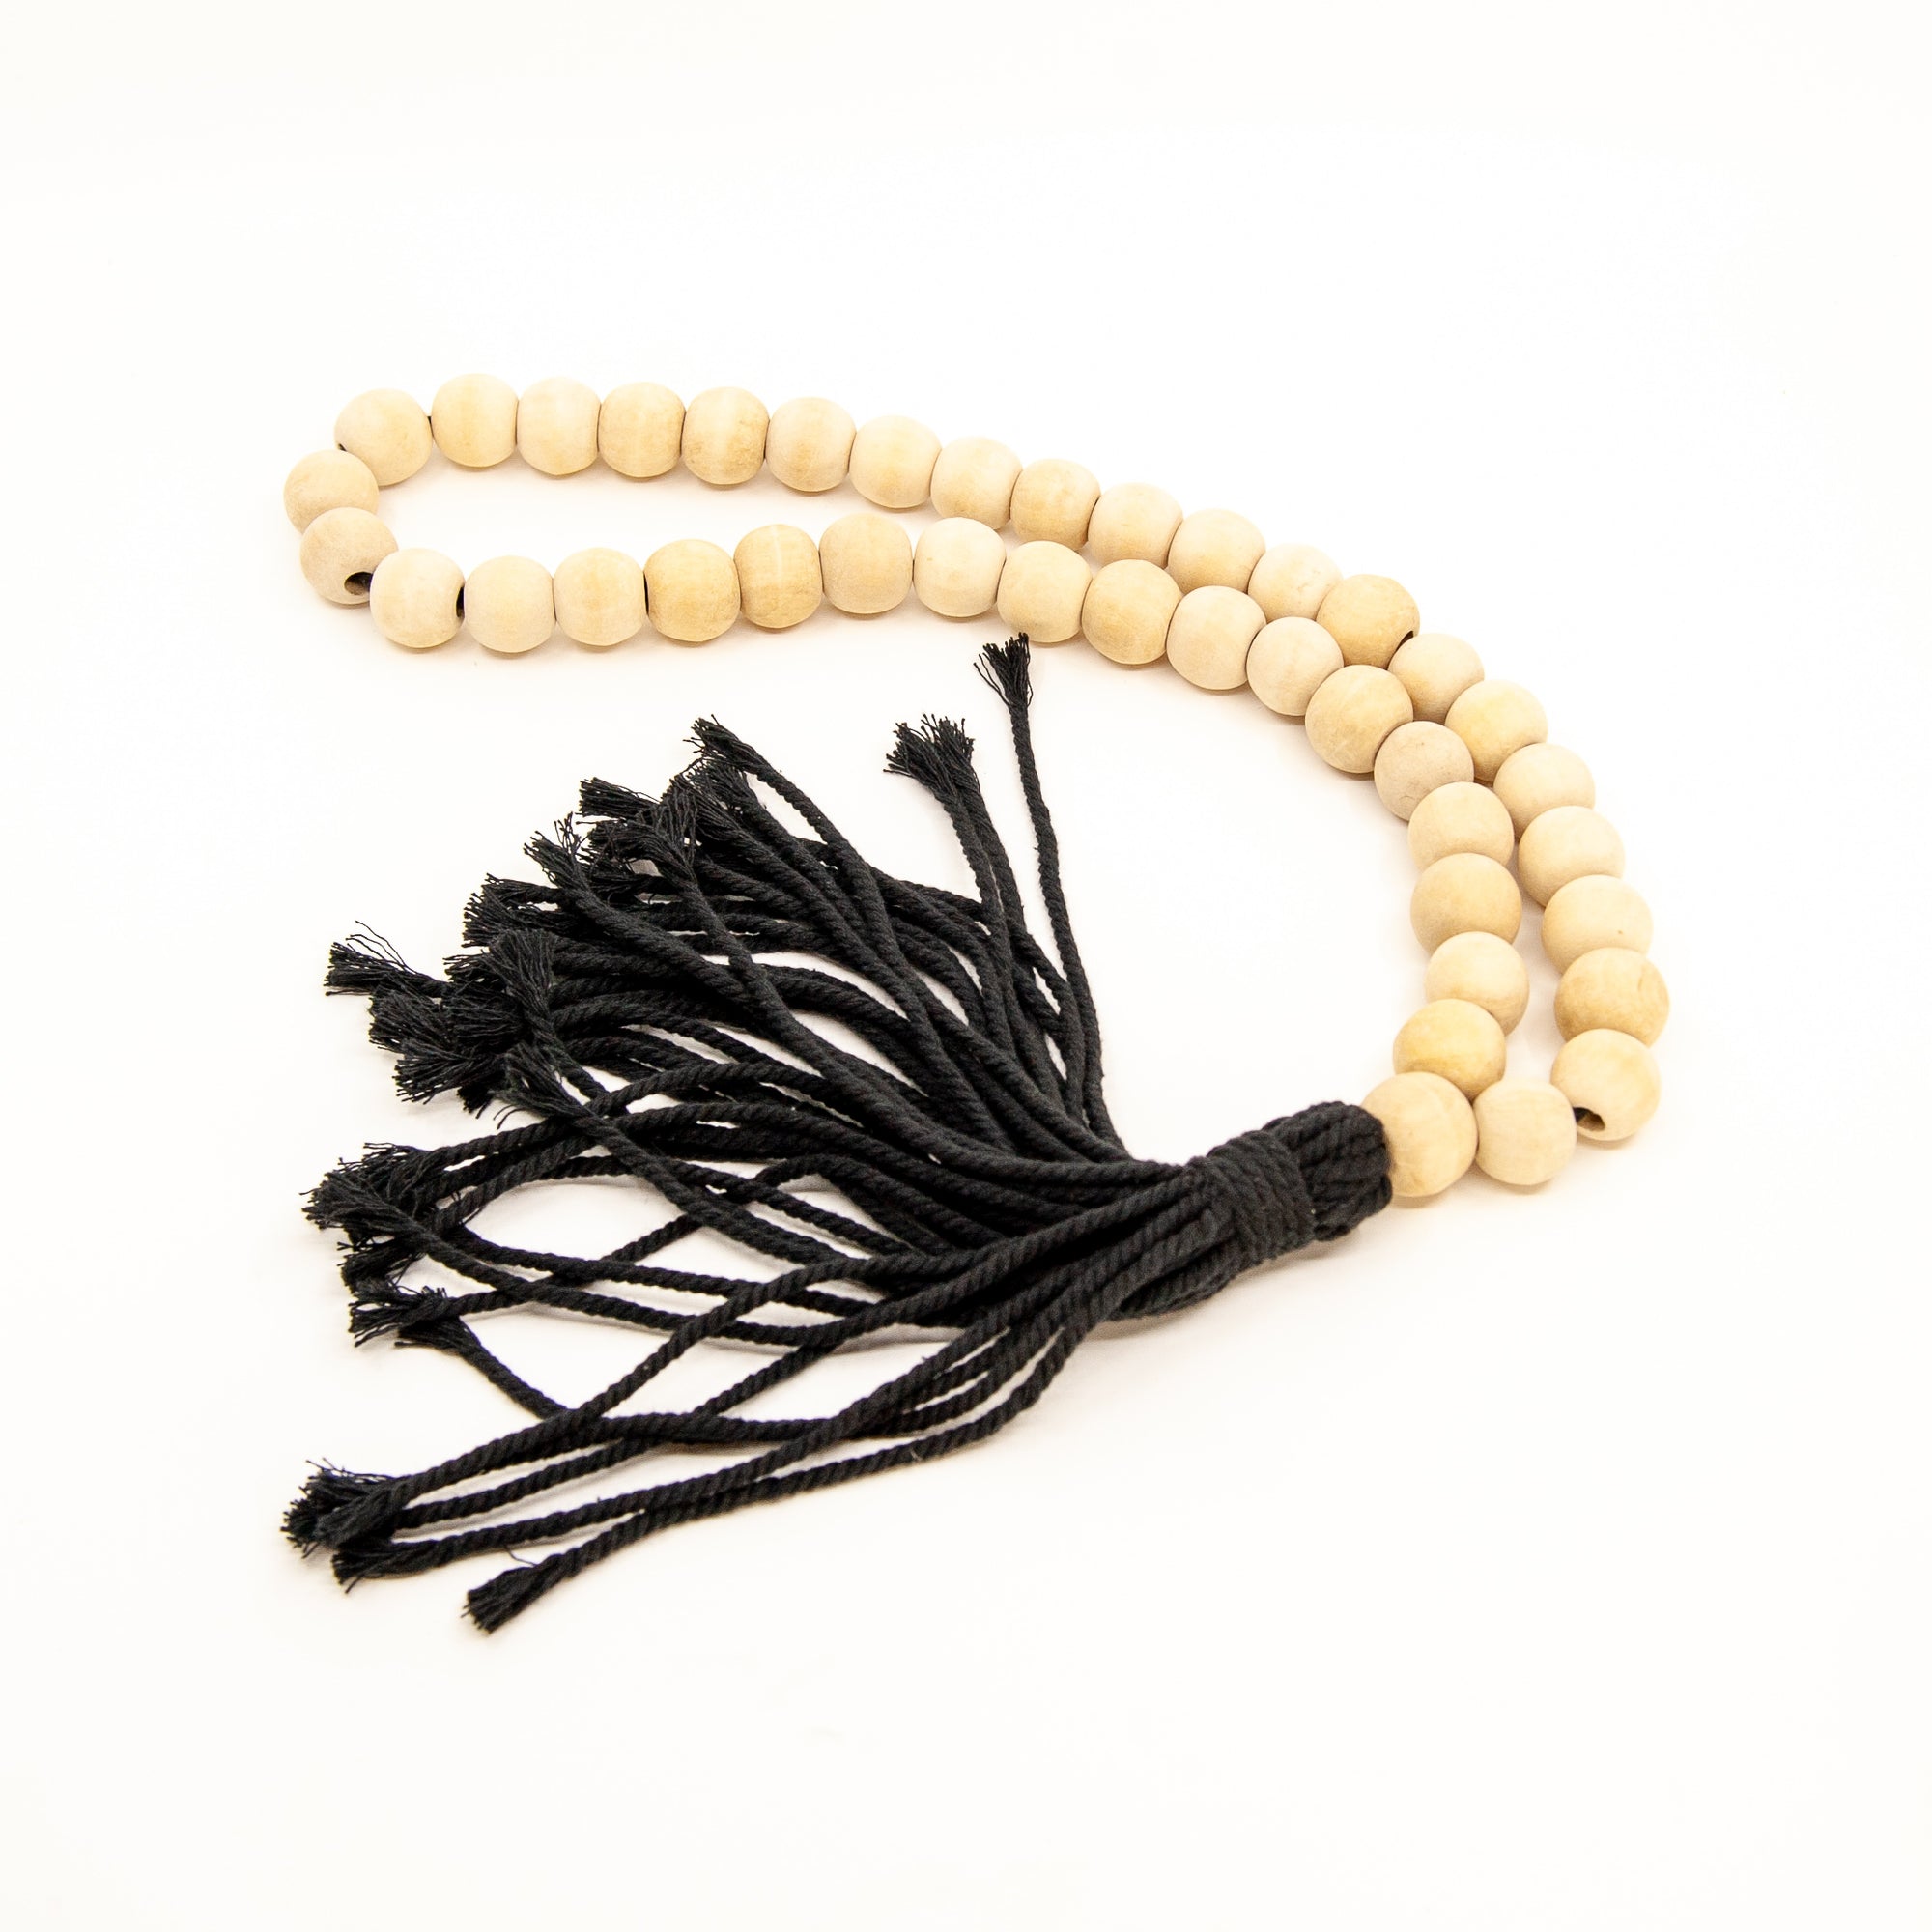 Decorative Beads (20mm)- Black Tassel